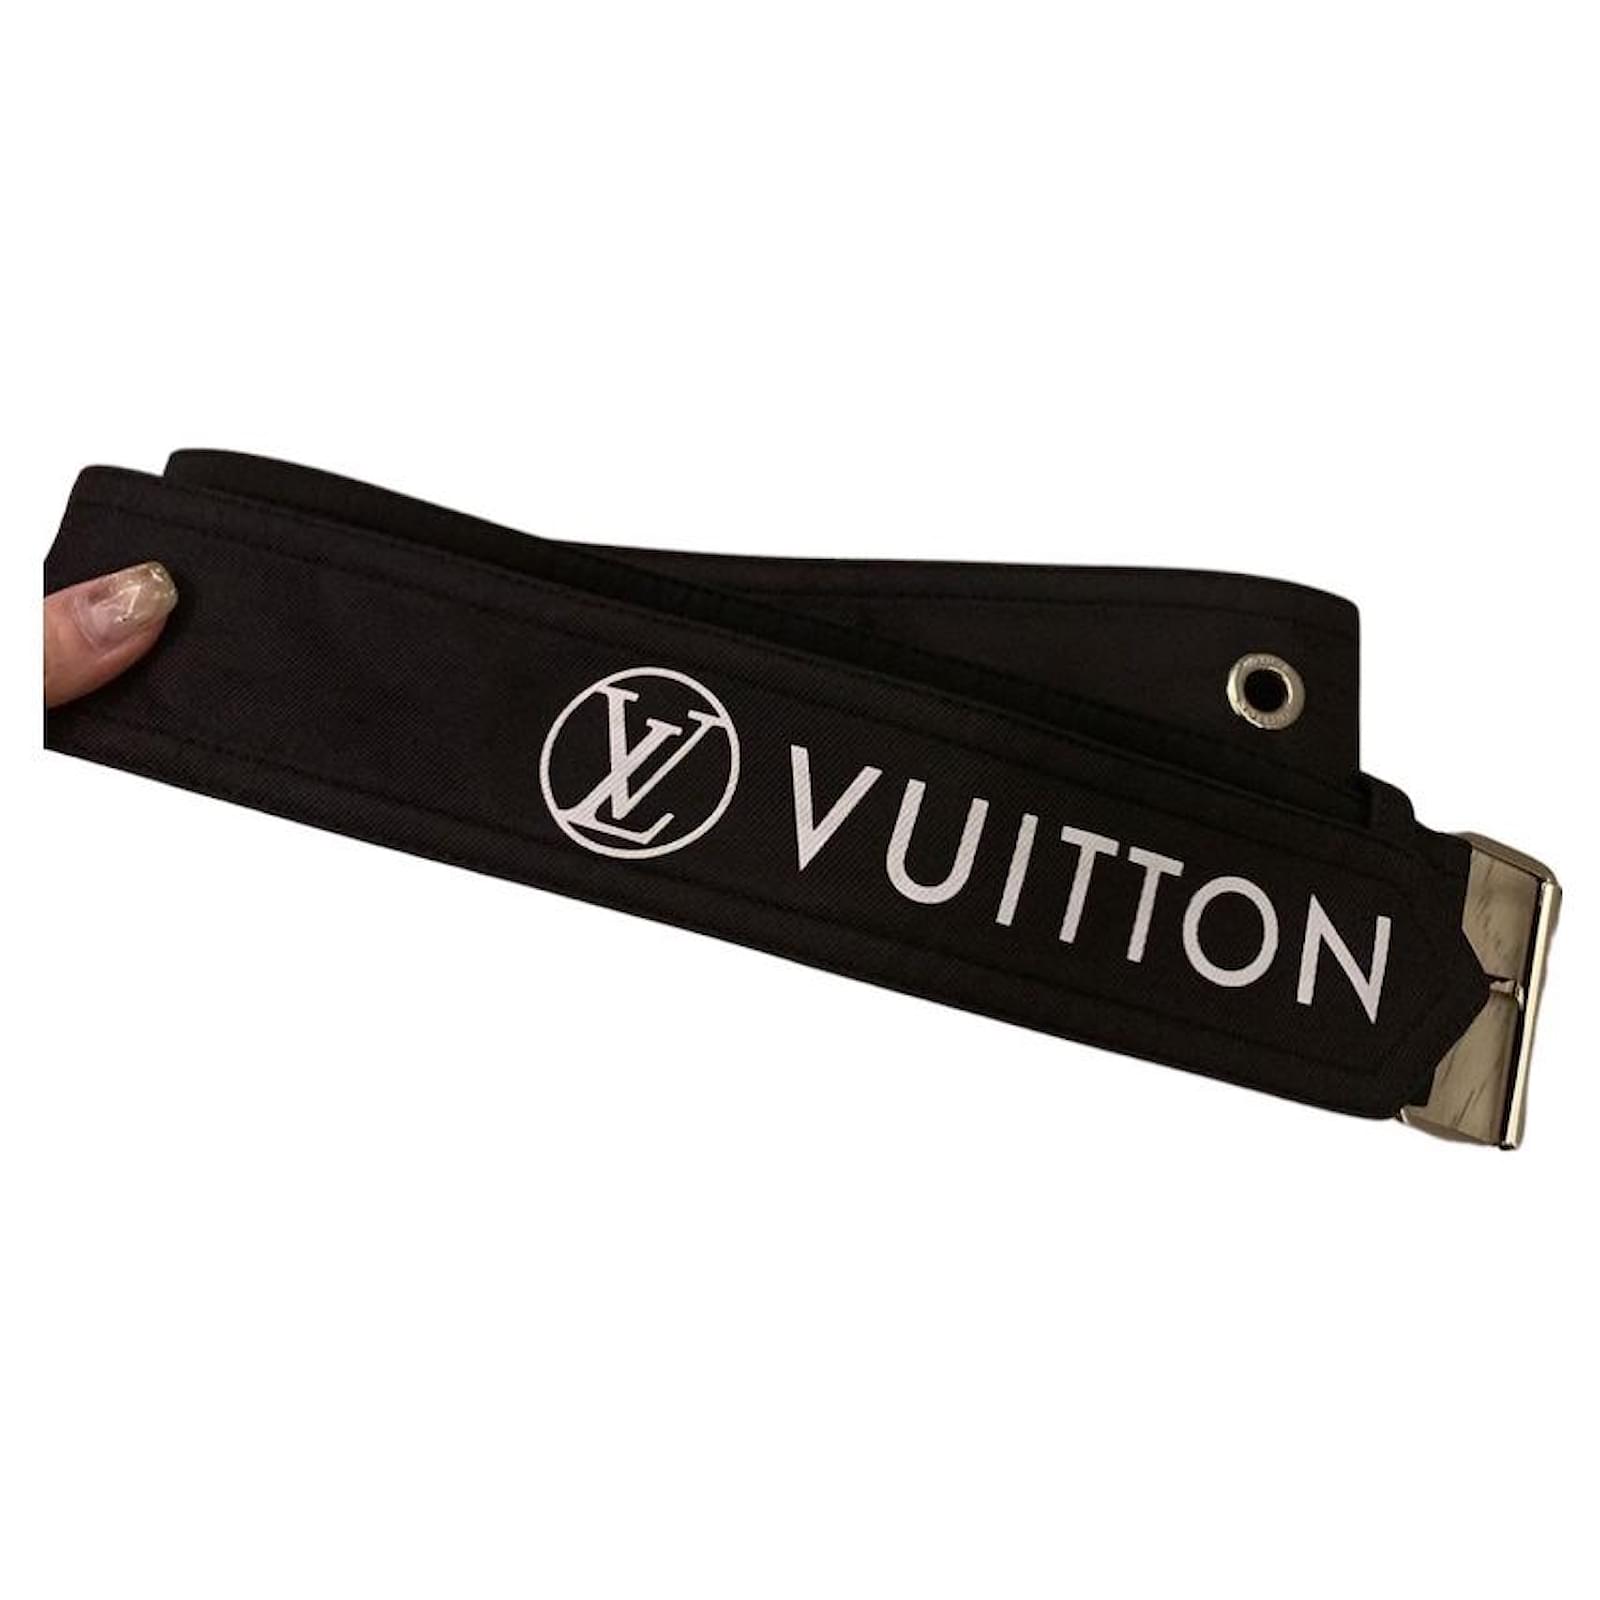 Louis Vuitton SPORTY TECHNICAL JERSEY MINI SKIRT Black Silk